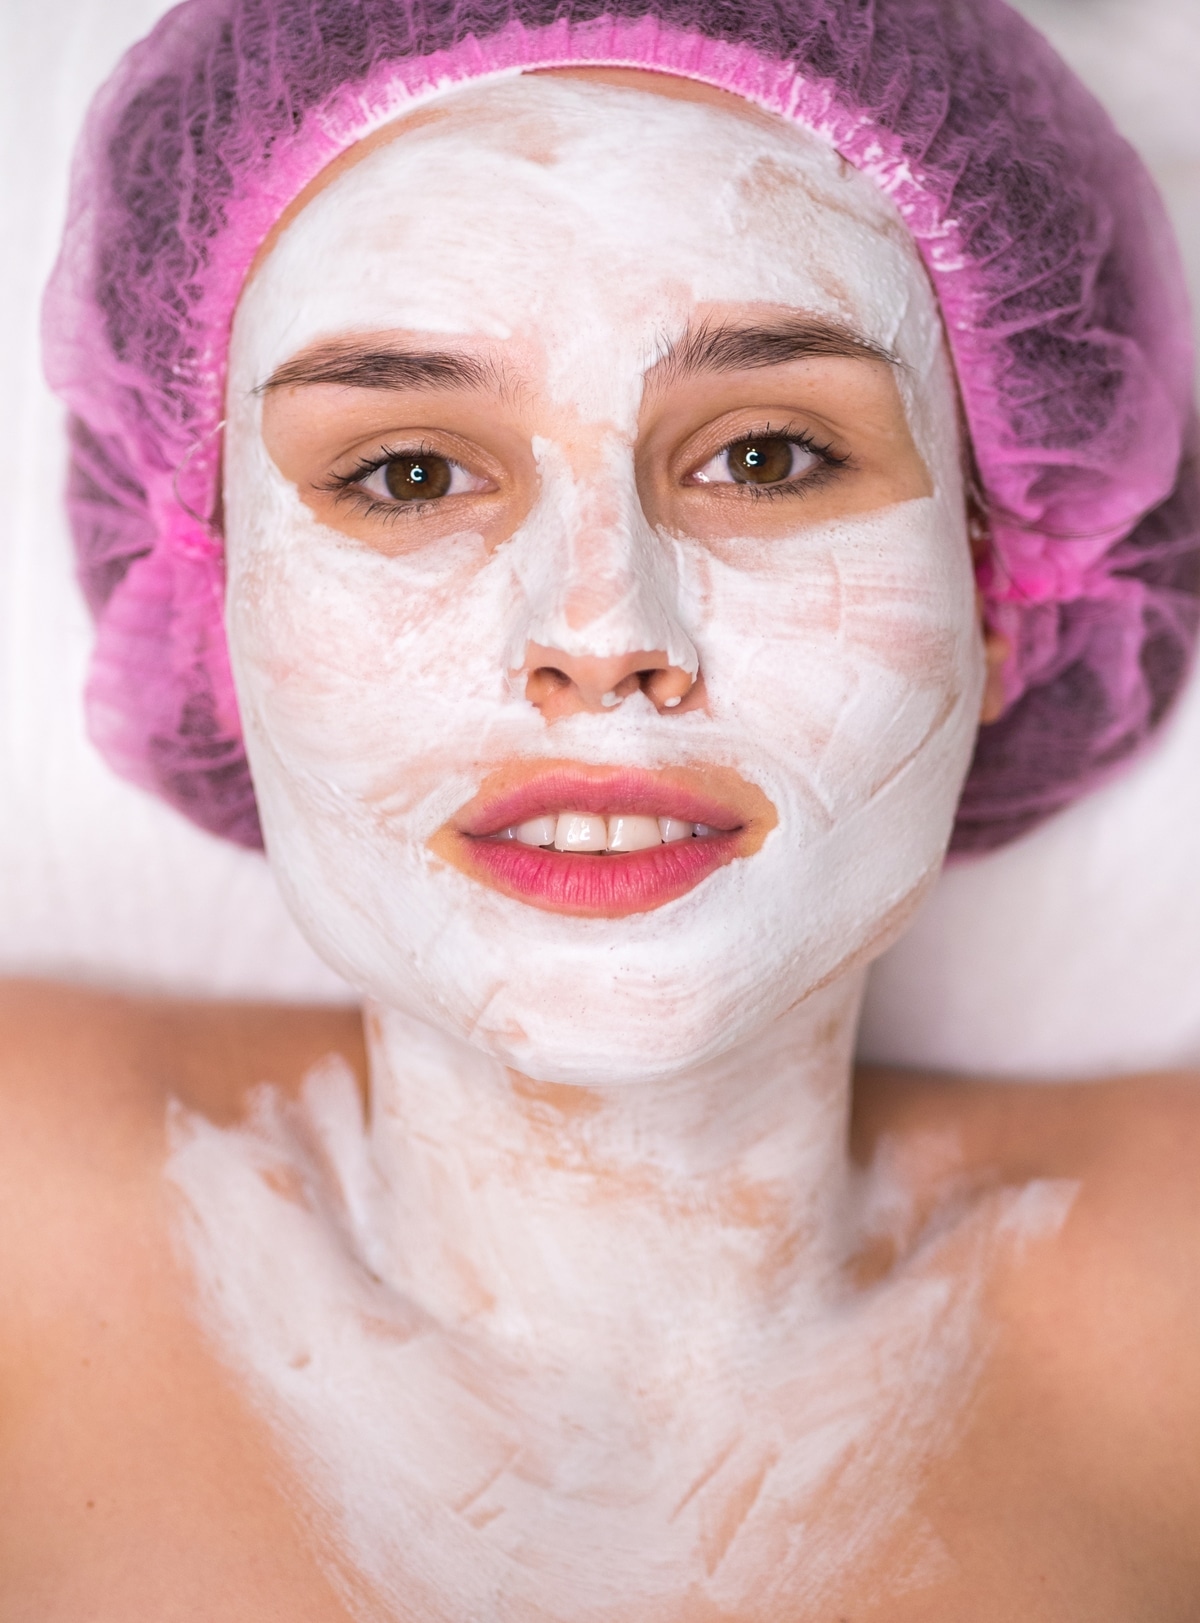 woman in anti aging cream mask at cosmetology proc 2022 11 07 07 16 43 utc - Comment protéger sa peau du froid et rester jeune cet hiver ?